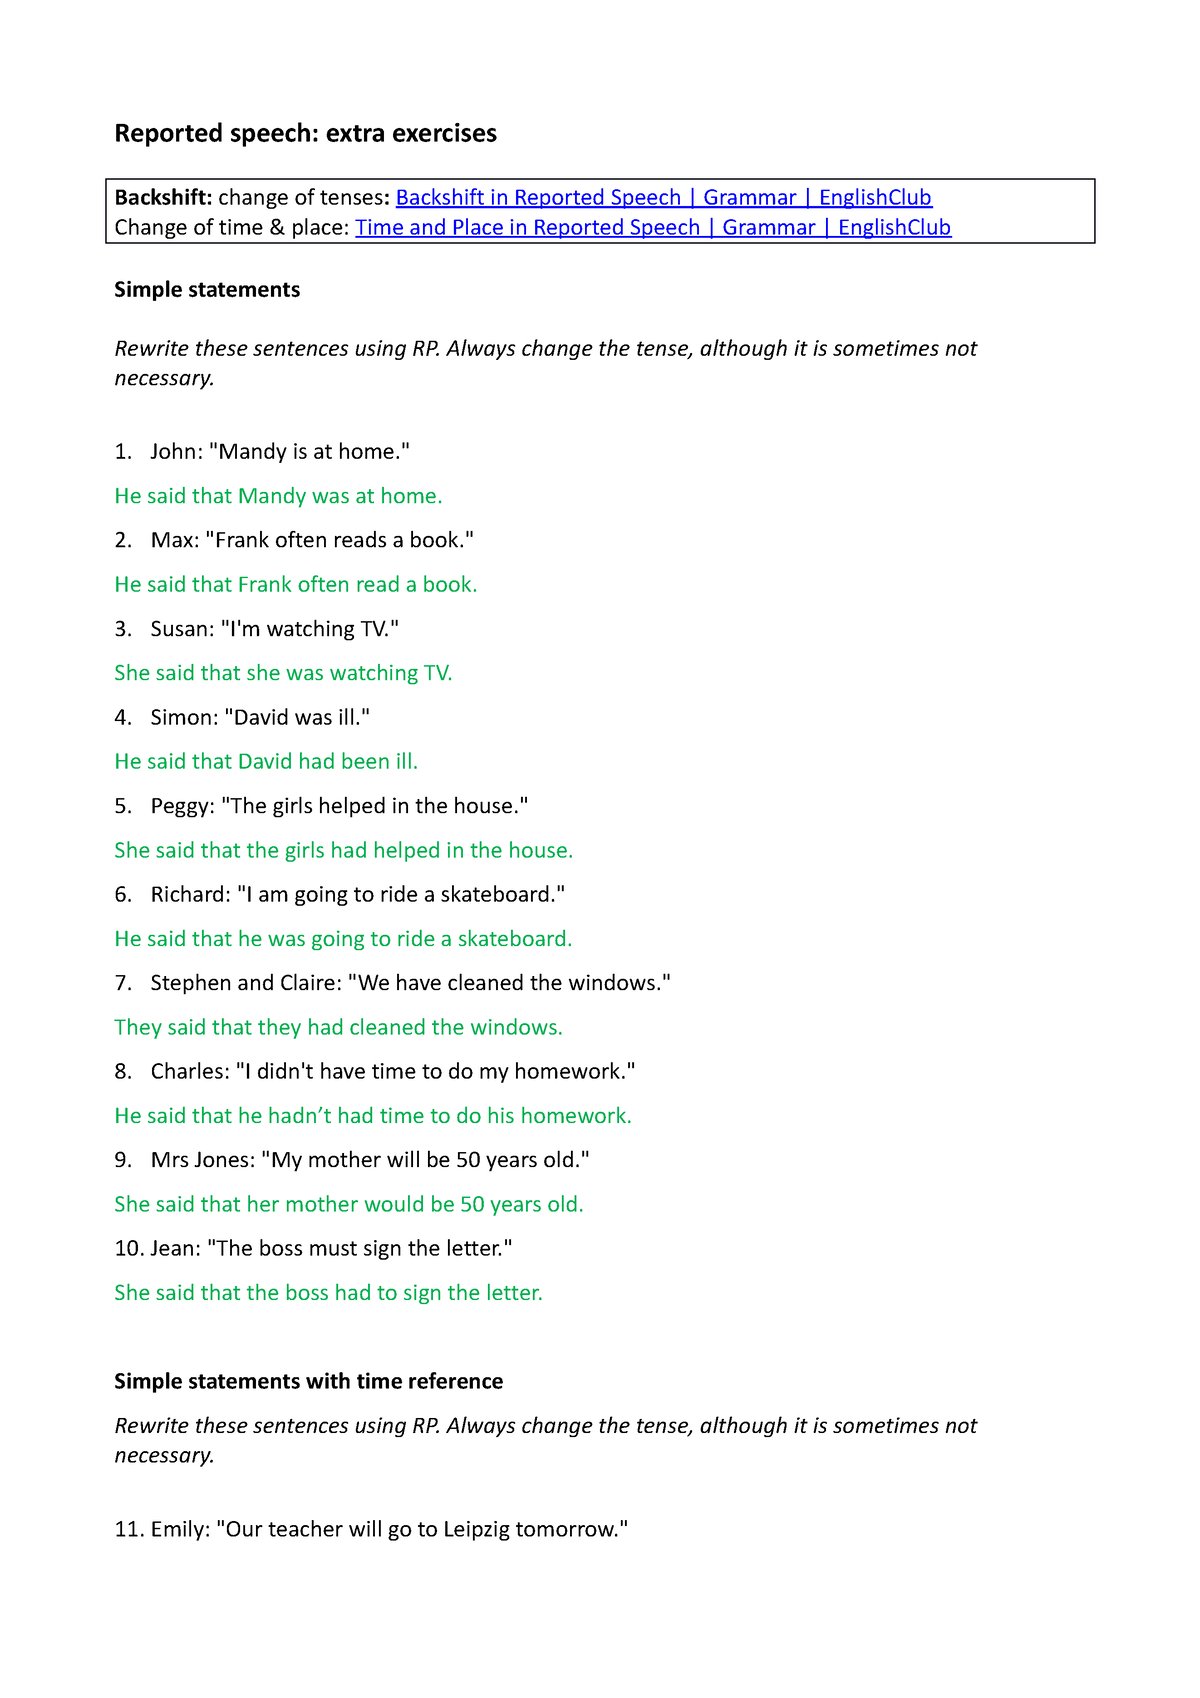 reported speech backshift exercises pdf